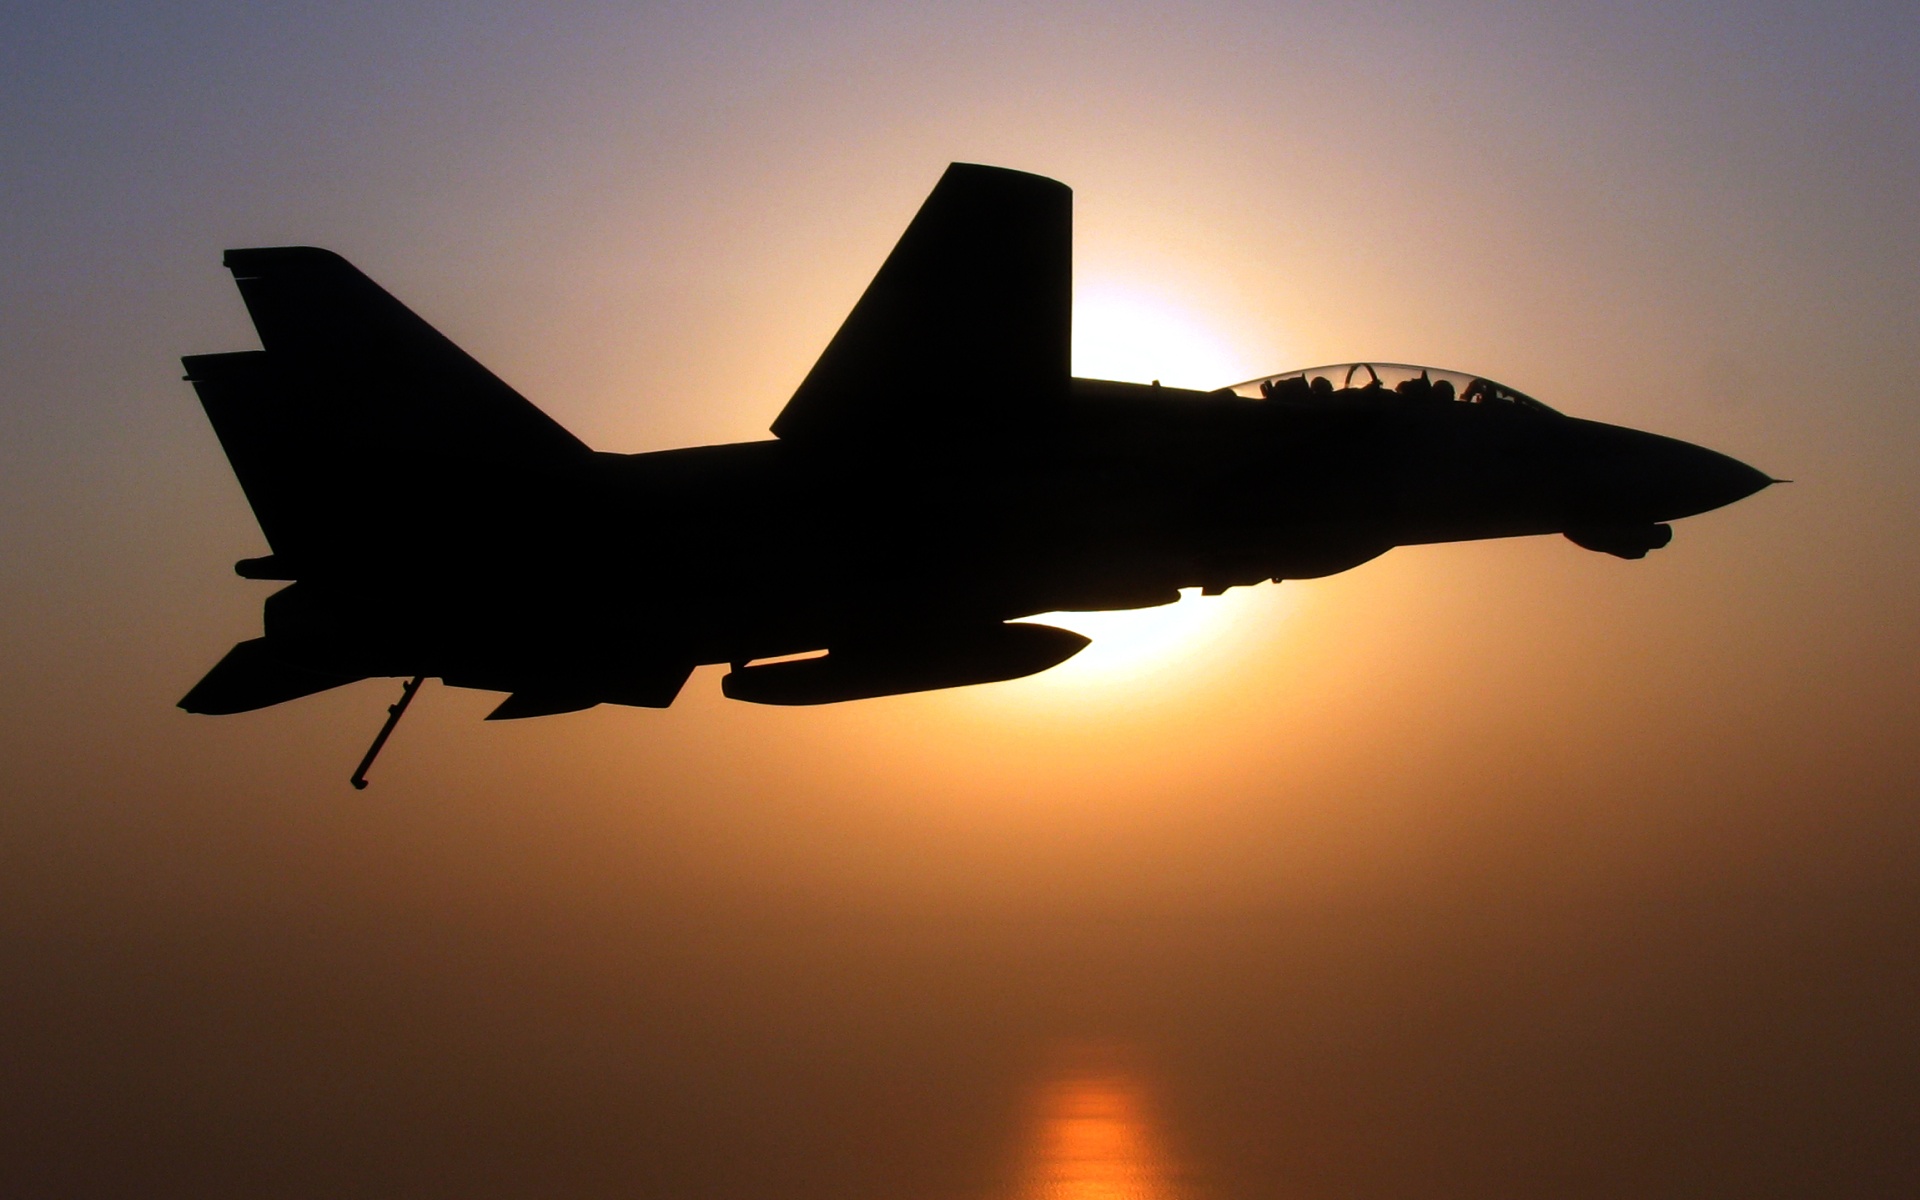 Navy F-14 Tomcat Silhouette | Fighter Aircraft | Pinterest ...